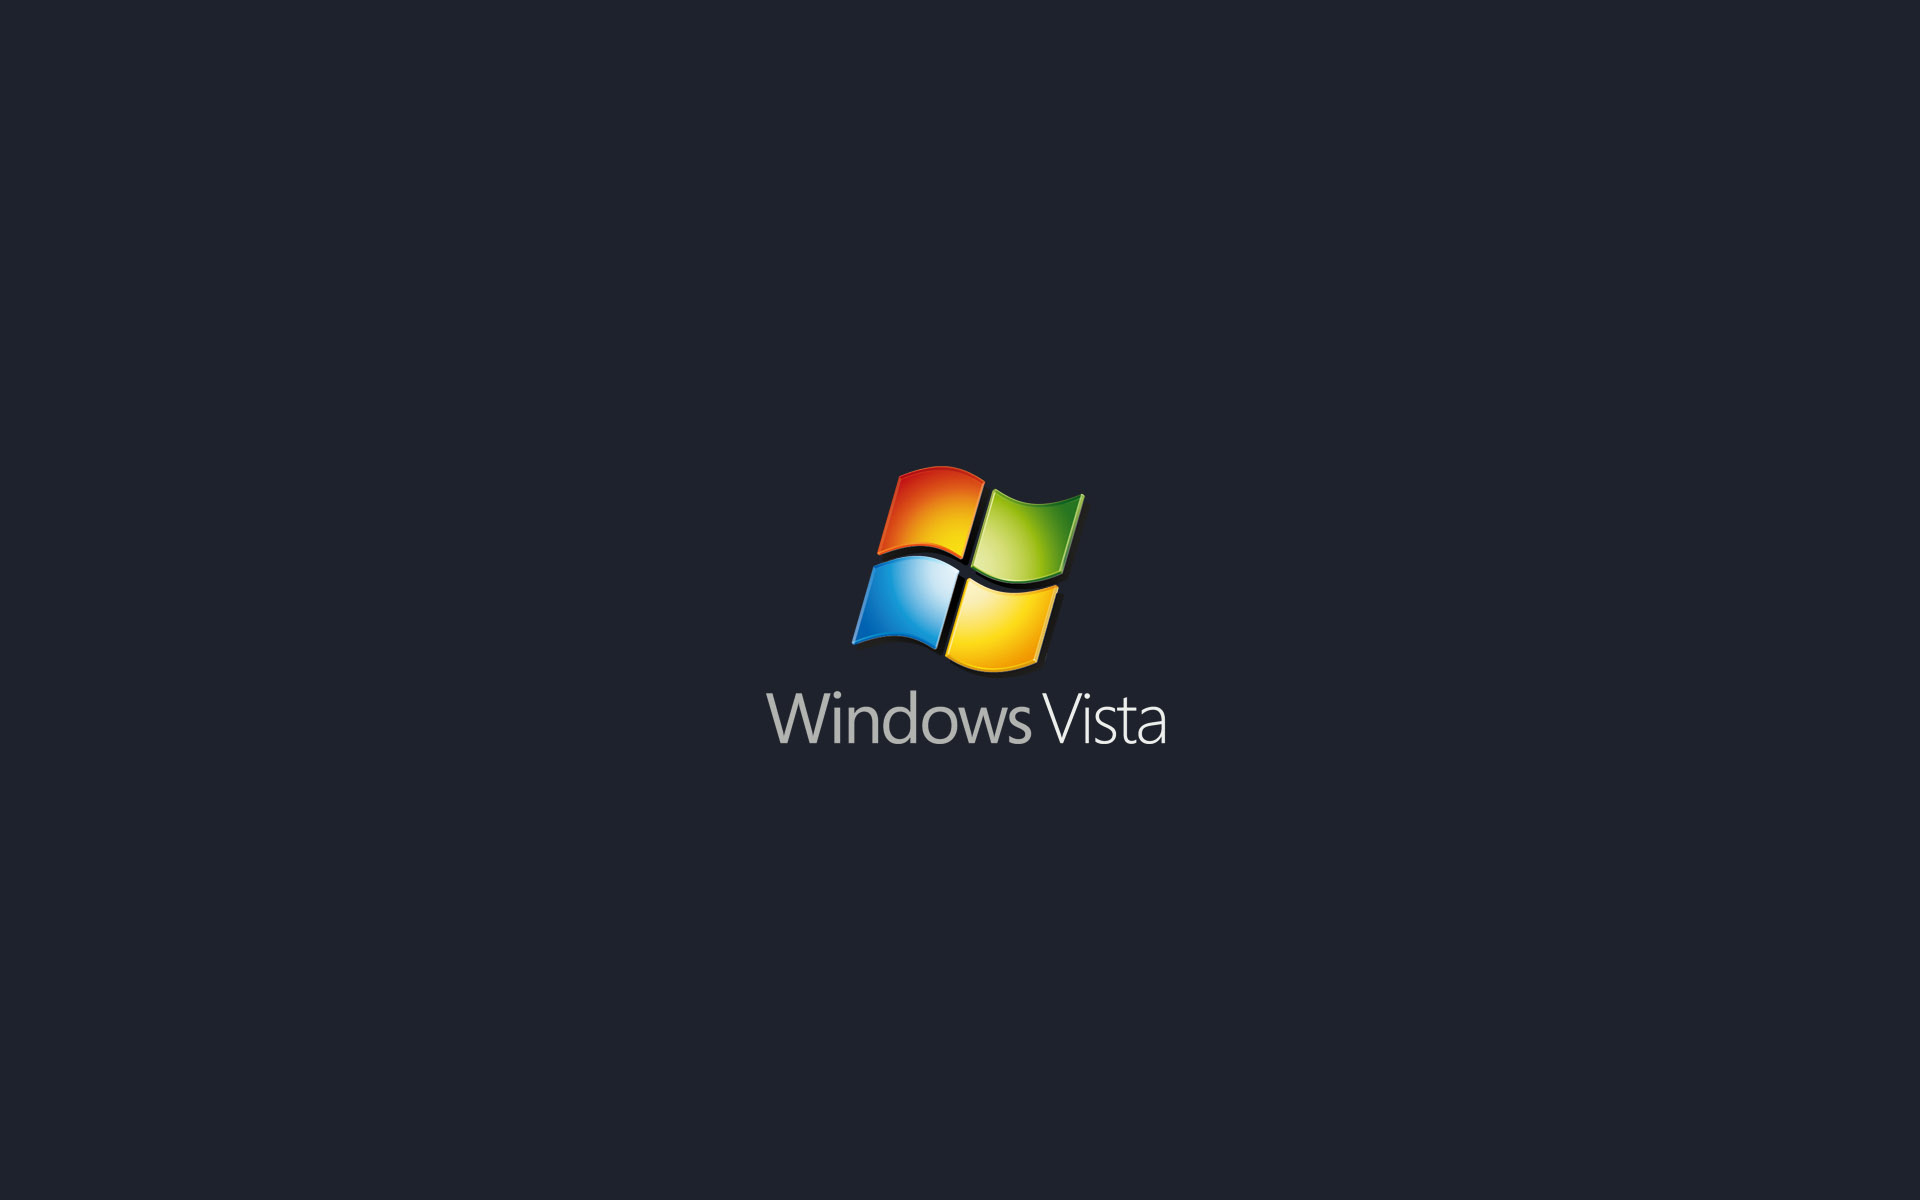 you are viewing the windows vista wallpaper named vista logo it has 1920x1200